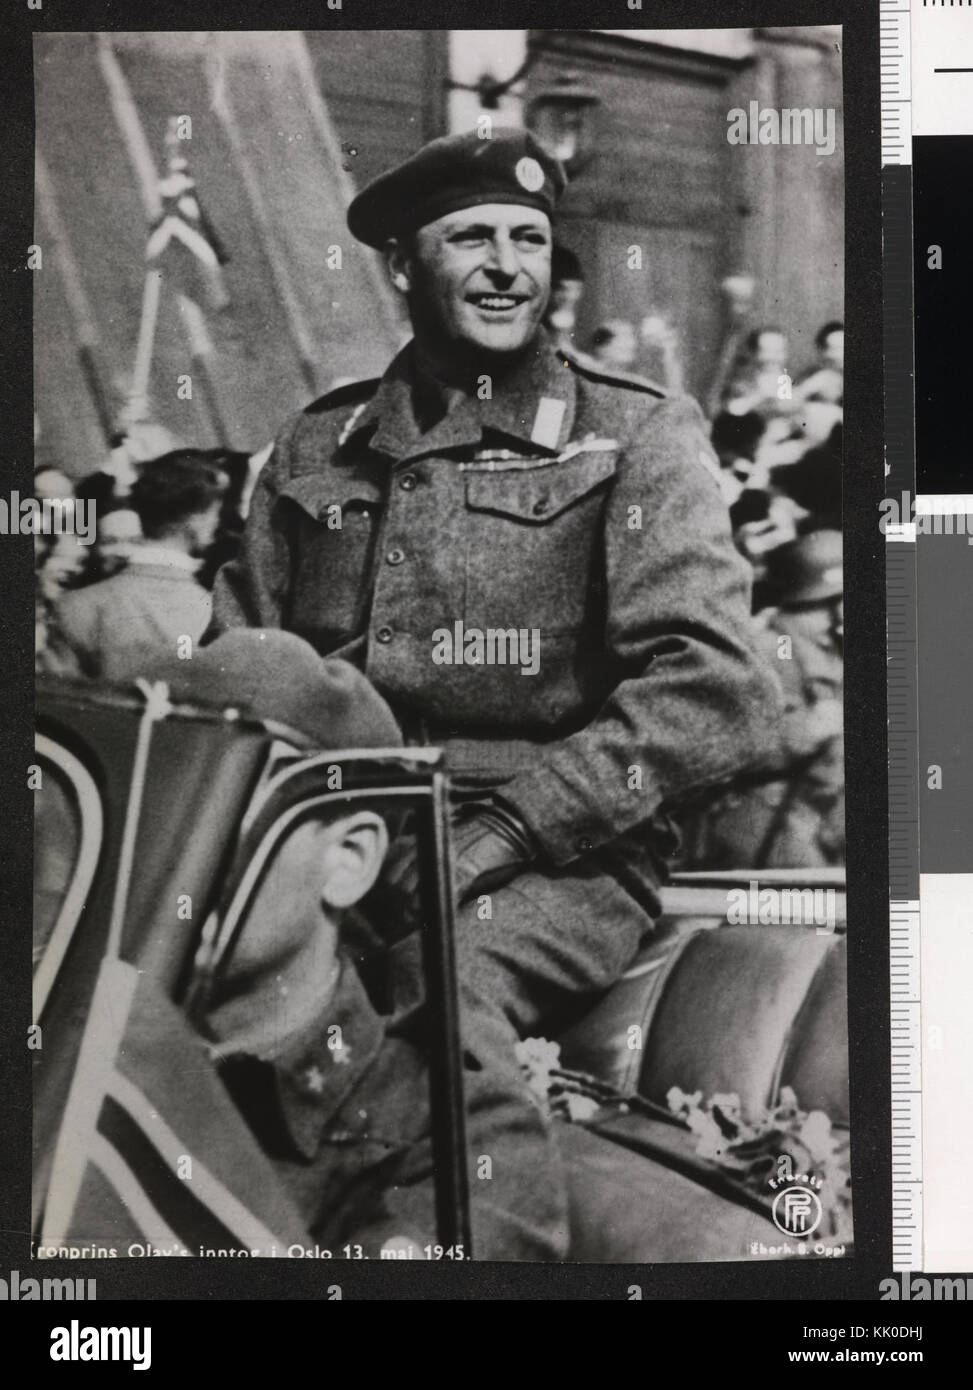 Kronprins Olav's inntog i Oslo 13. mai 1945 n. nb digifoto 20160115 00041 bldsa pk kgl0030 Foto Stock